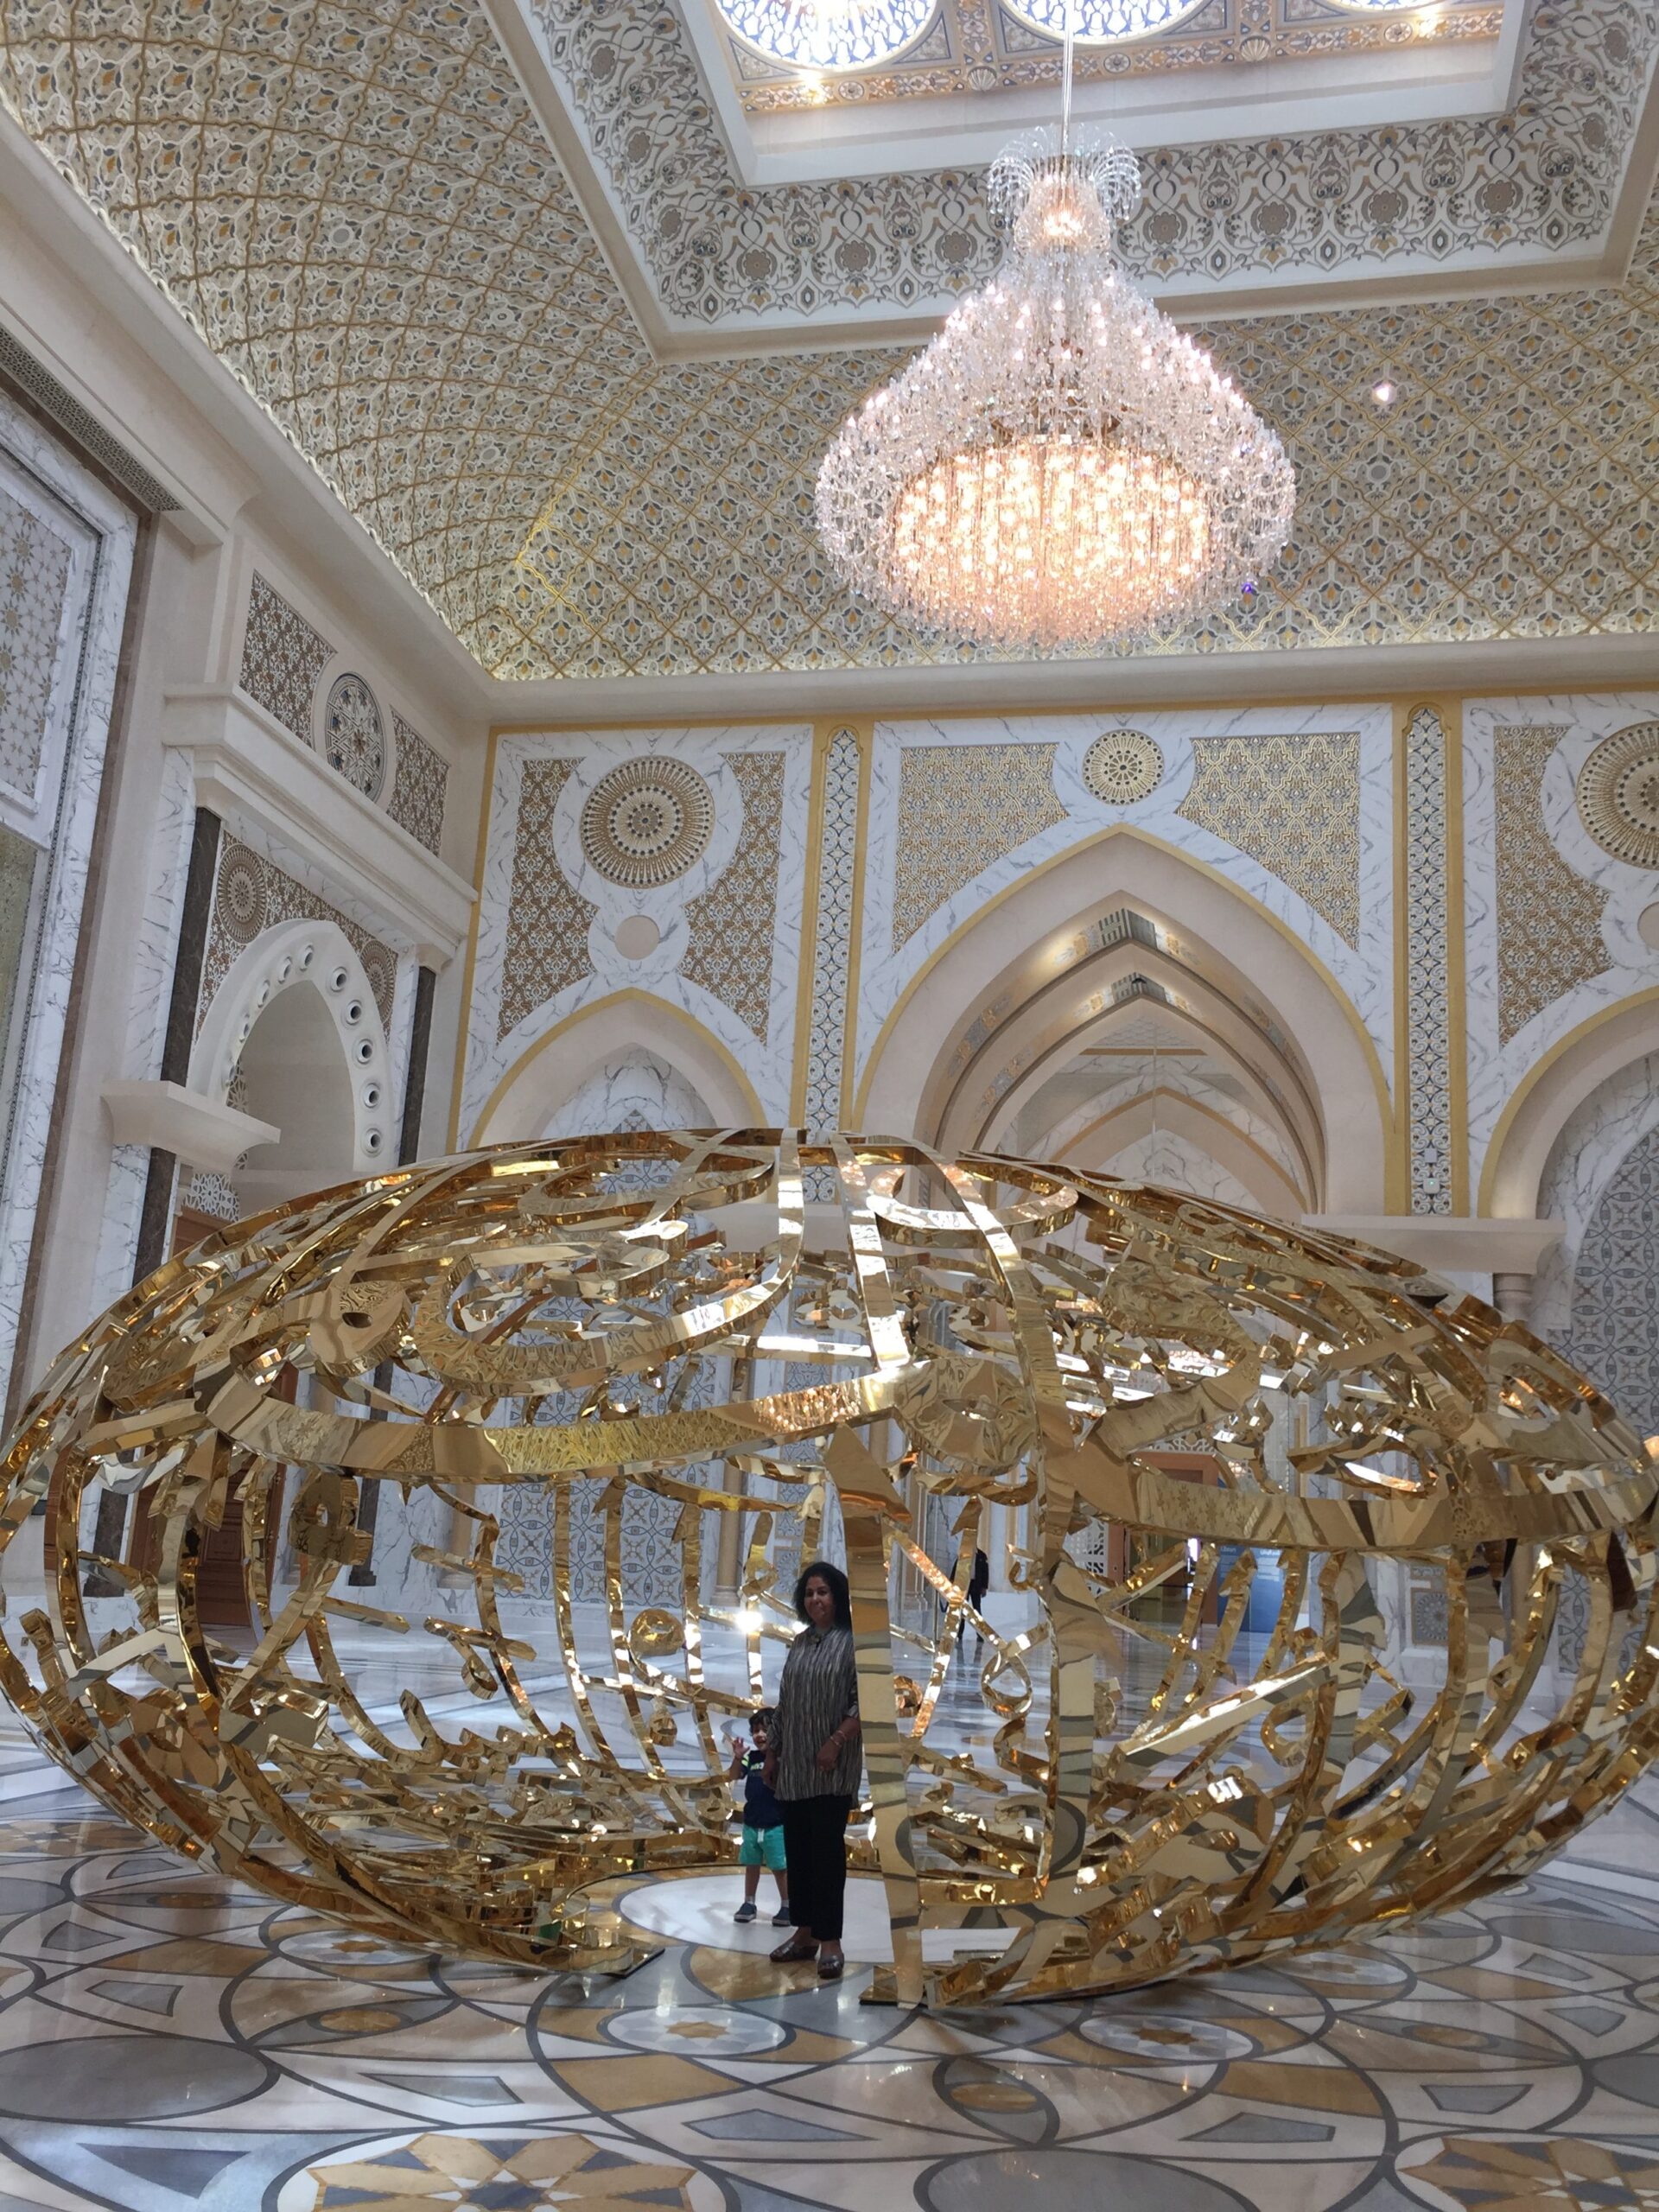 Qasr al Watan, a nemzet palotája, Abu Dhabi, arany korona